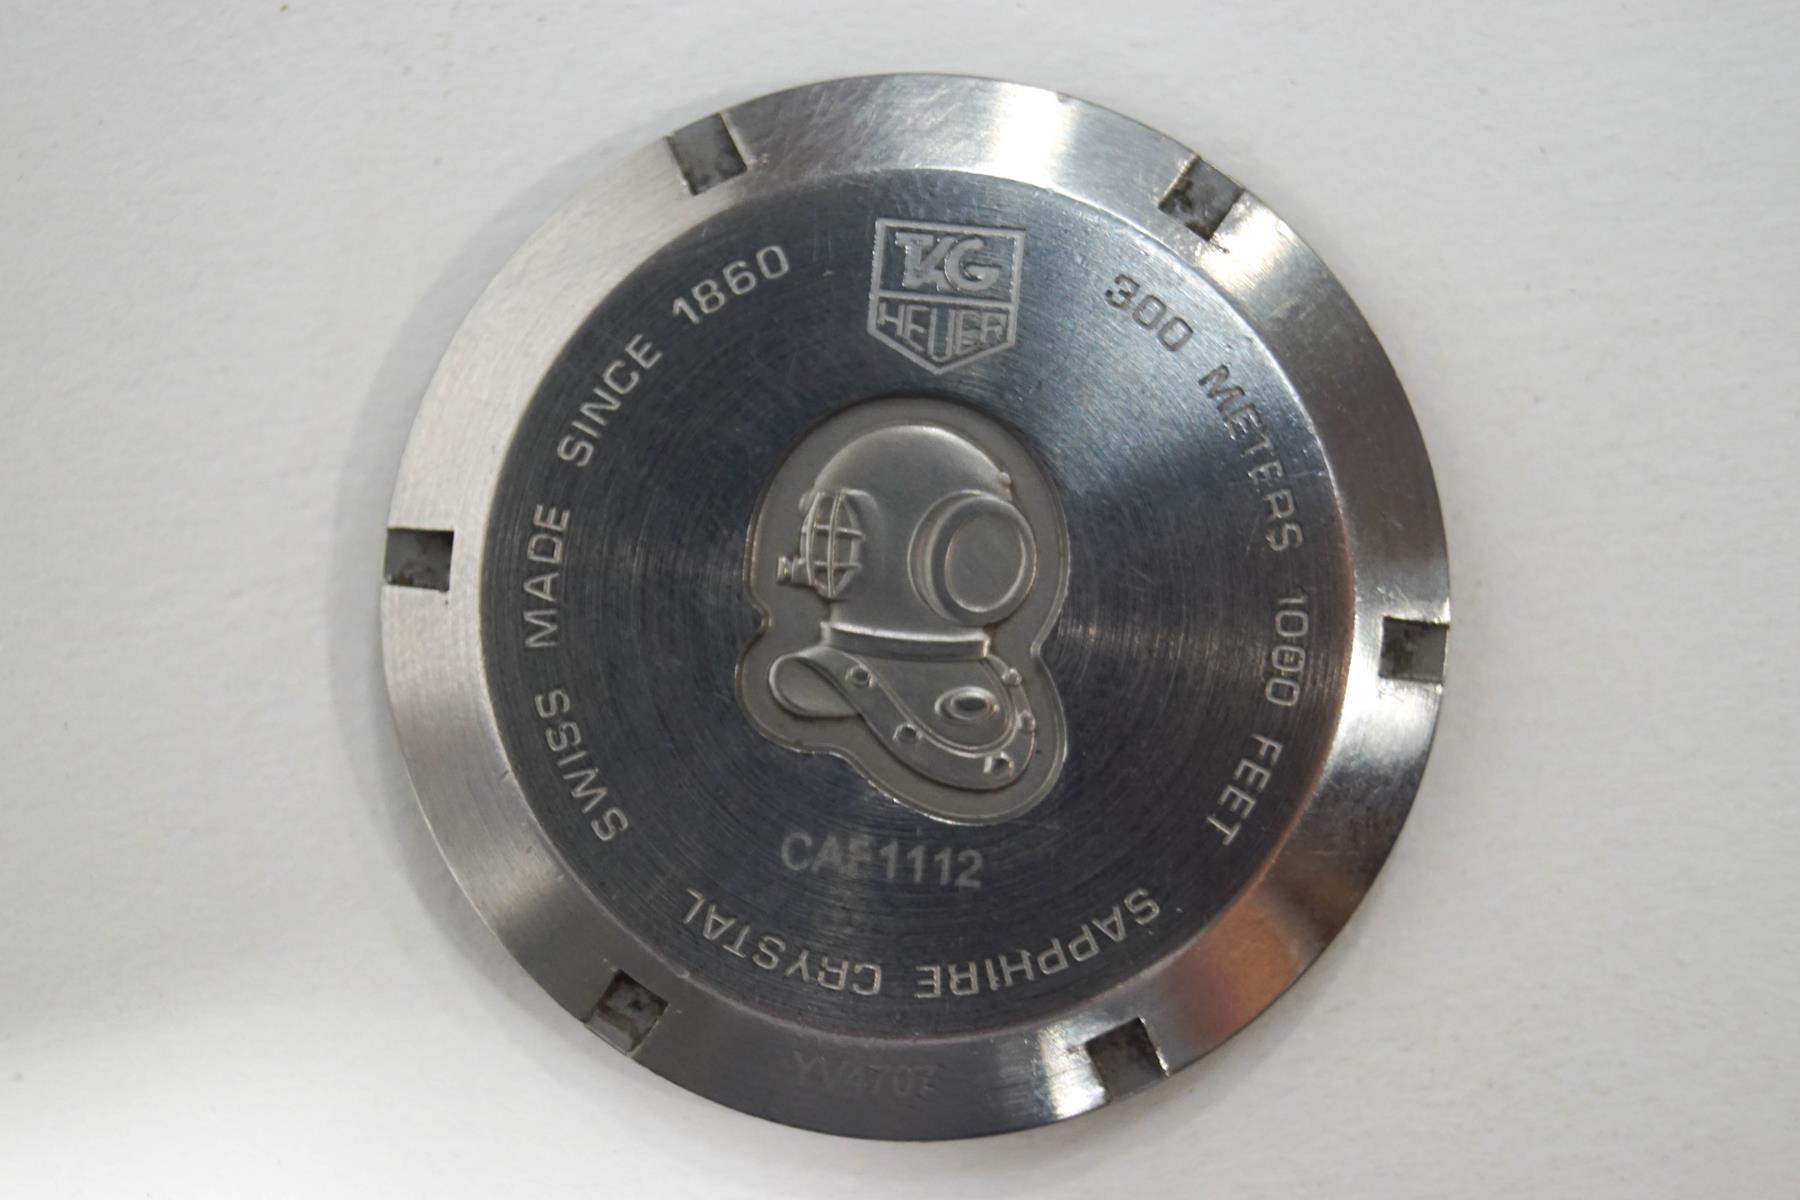 Tag Heuer, 300M Aquaracer gentleman's stainless steel chronograph bracelet watch, - Image 2 of 5